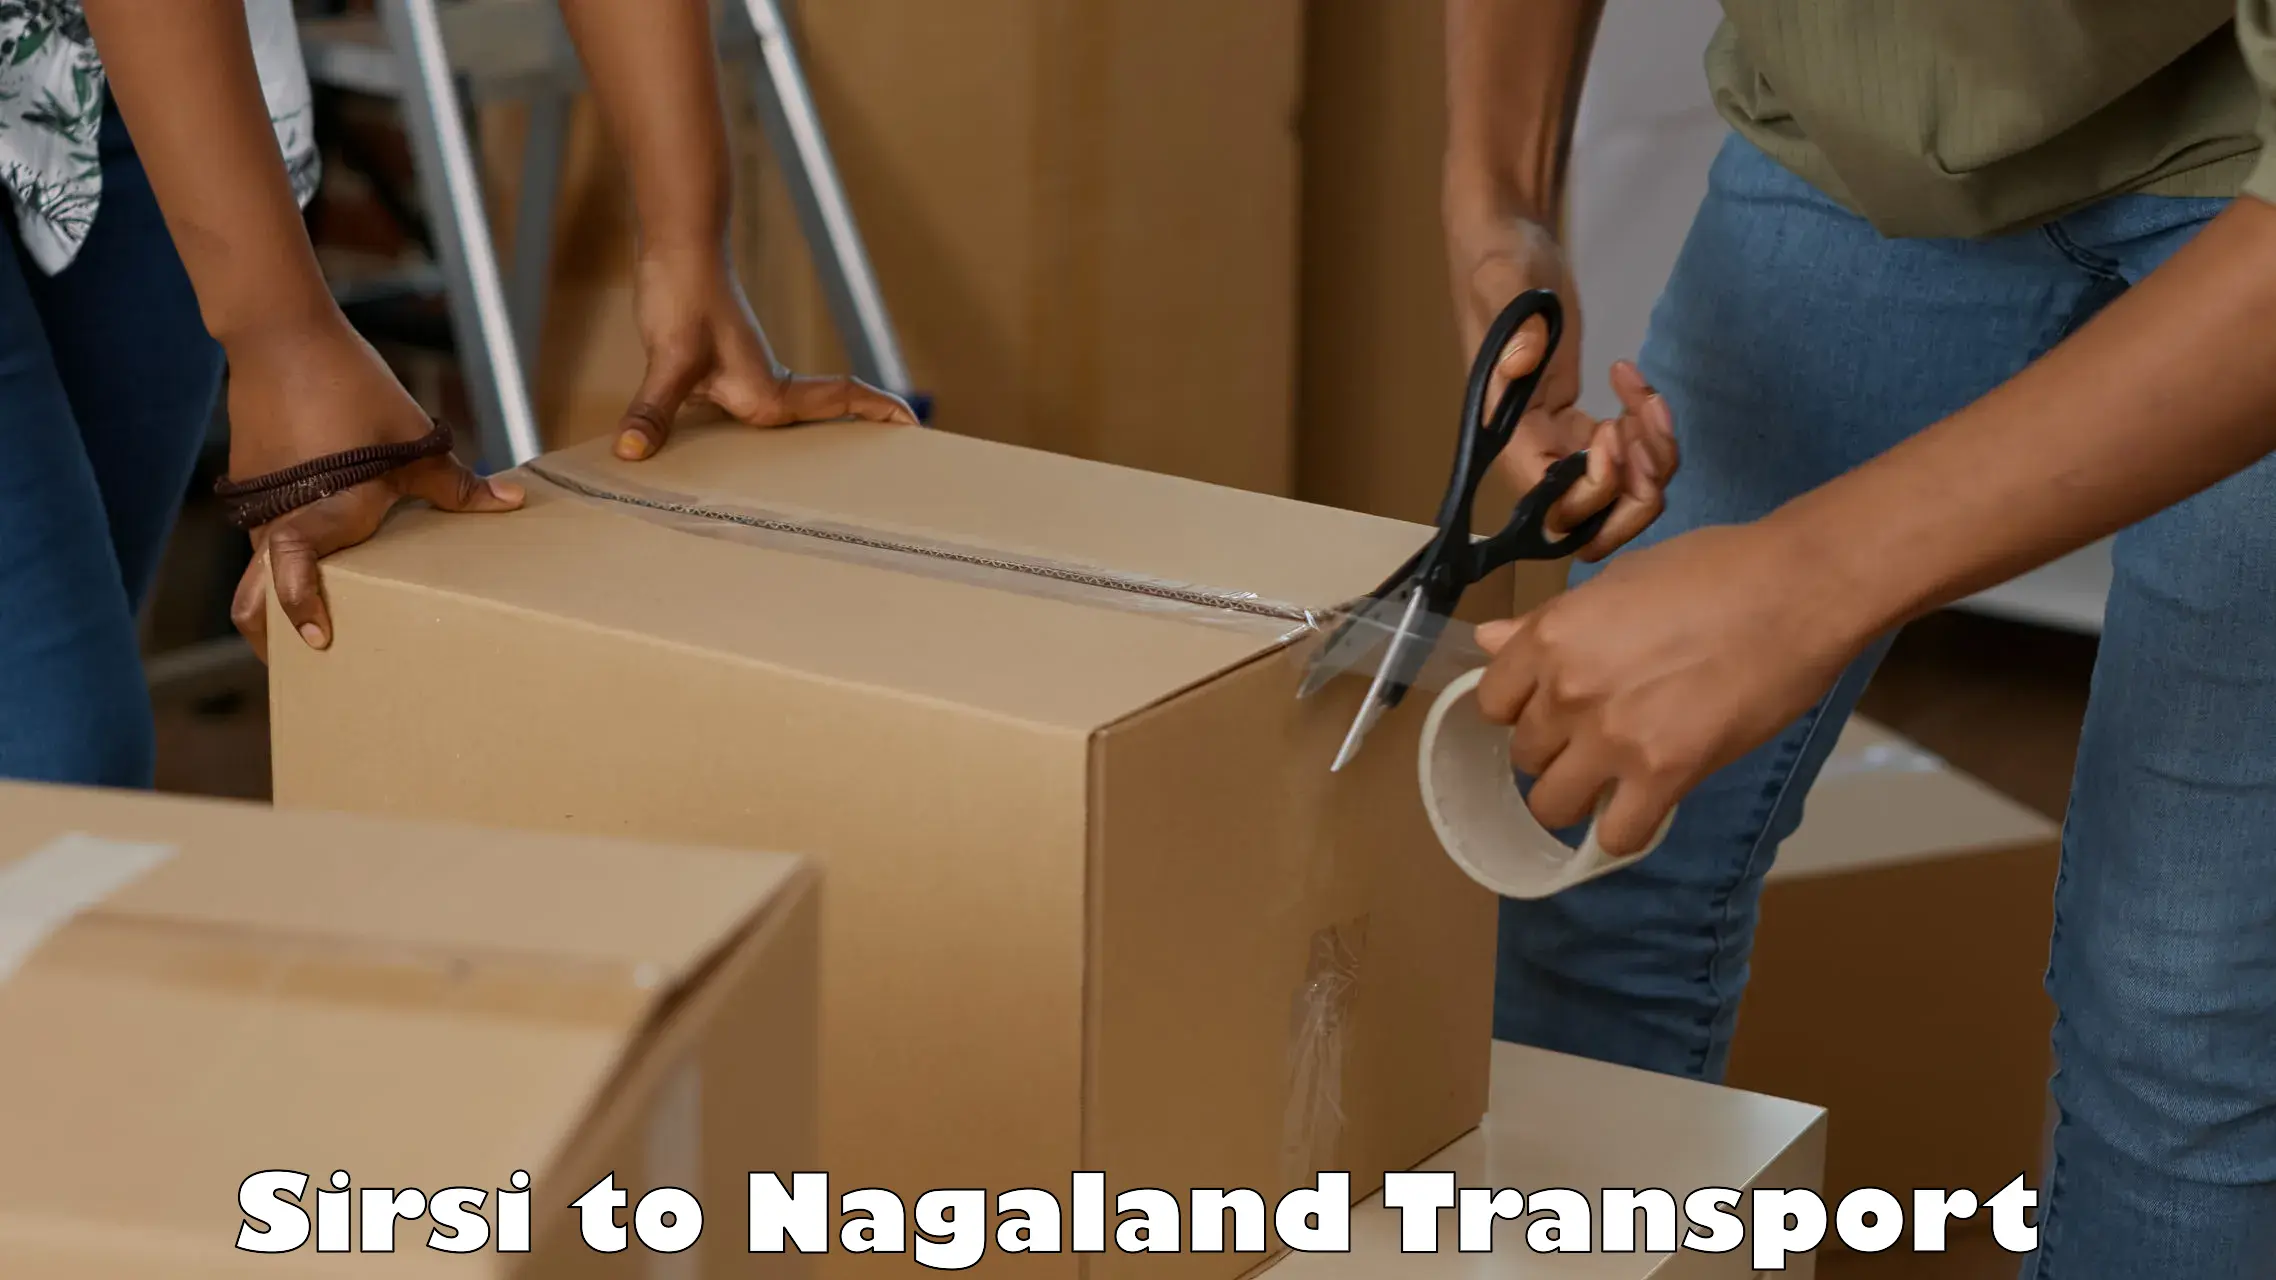 Bike transport service Sirsi to Nagaland